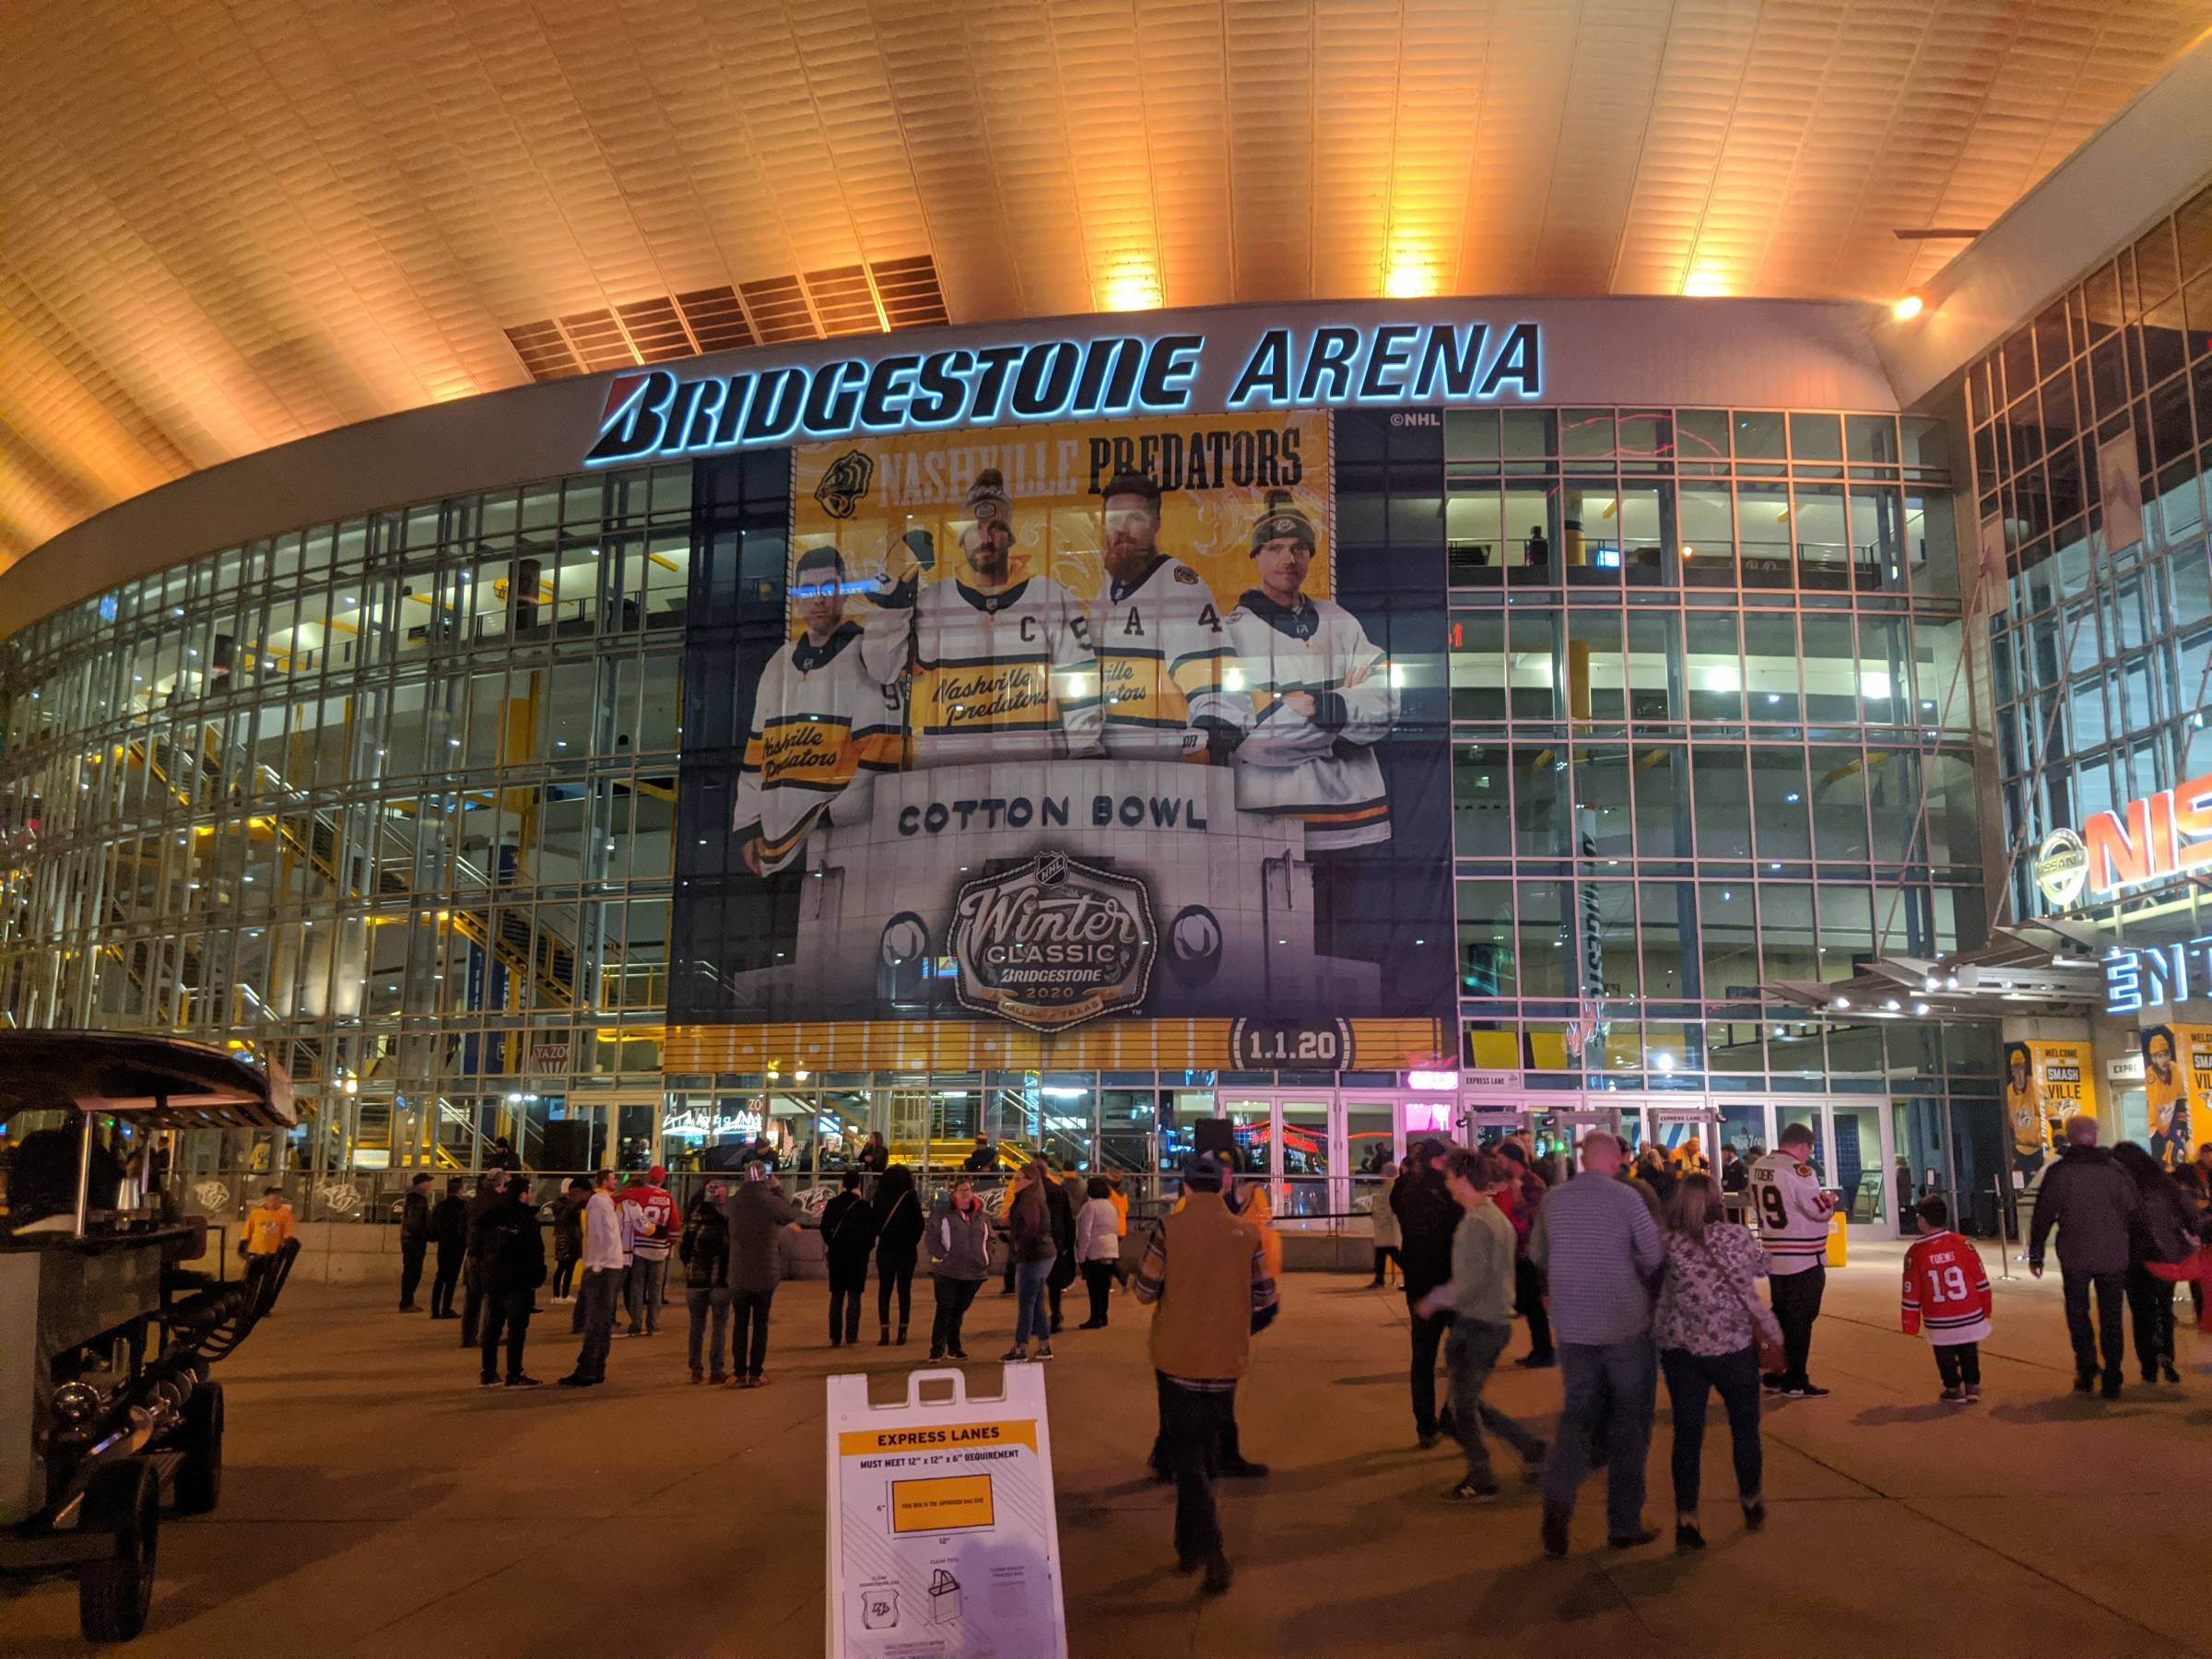 entrance to Bridgestone Arena